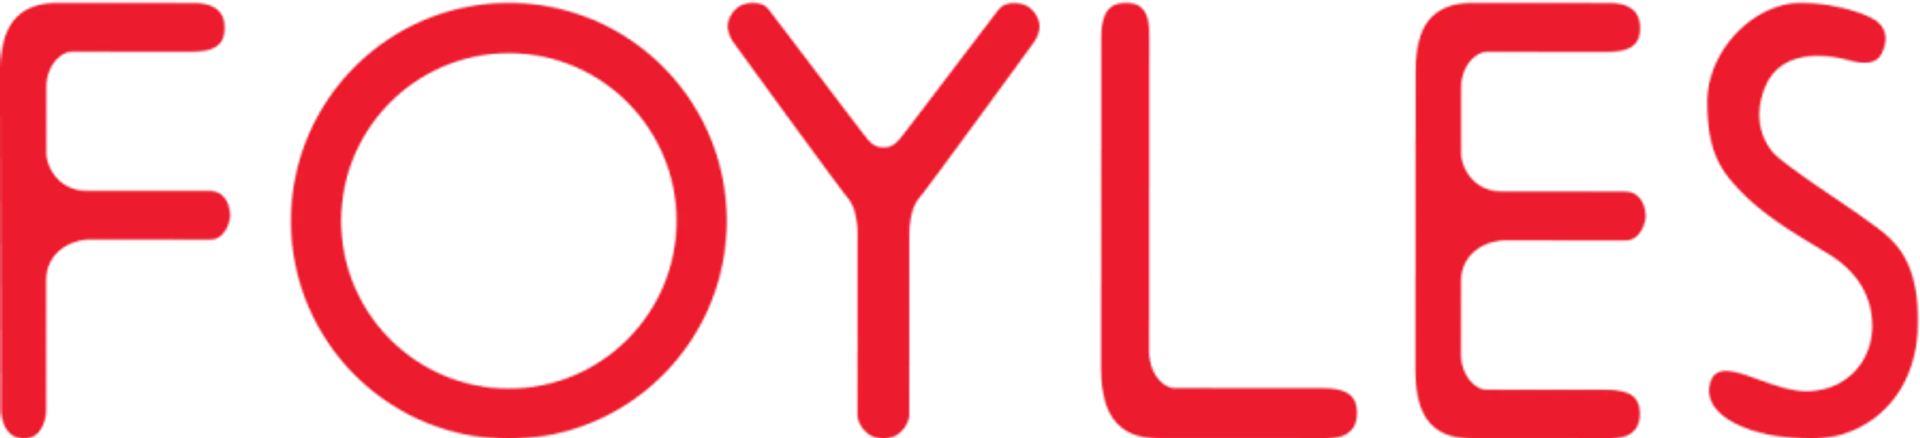  FOYLES logo